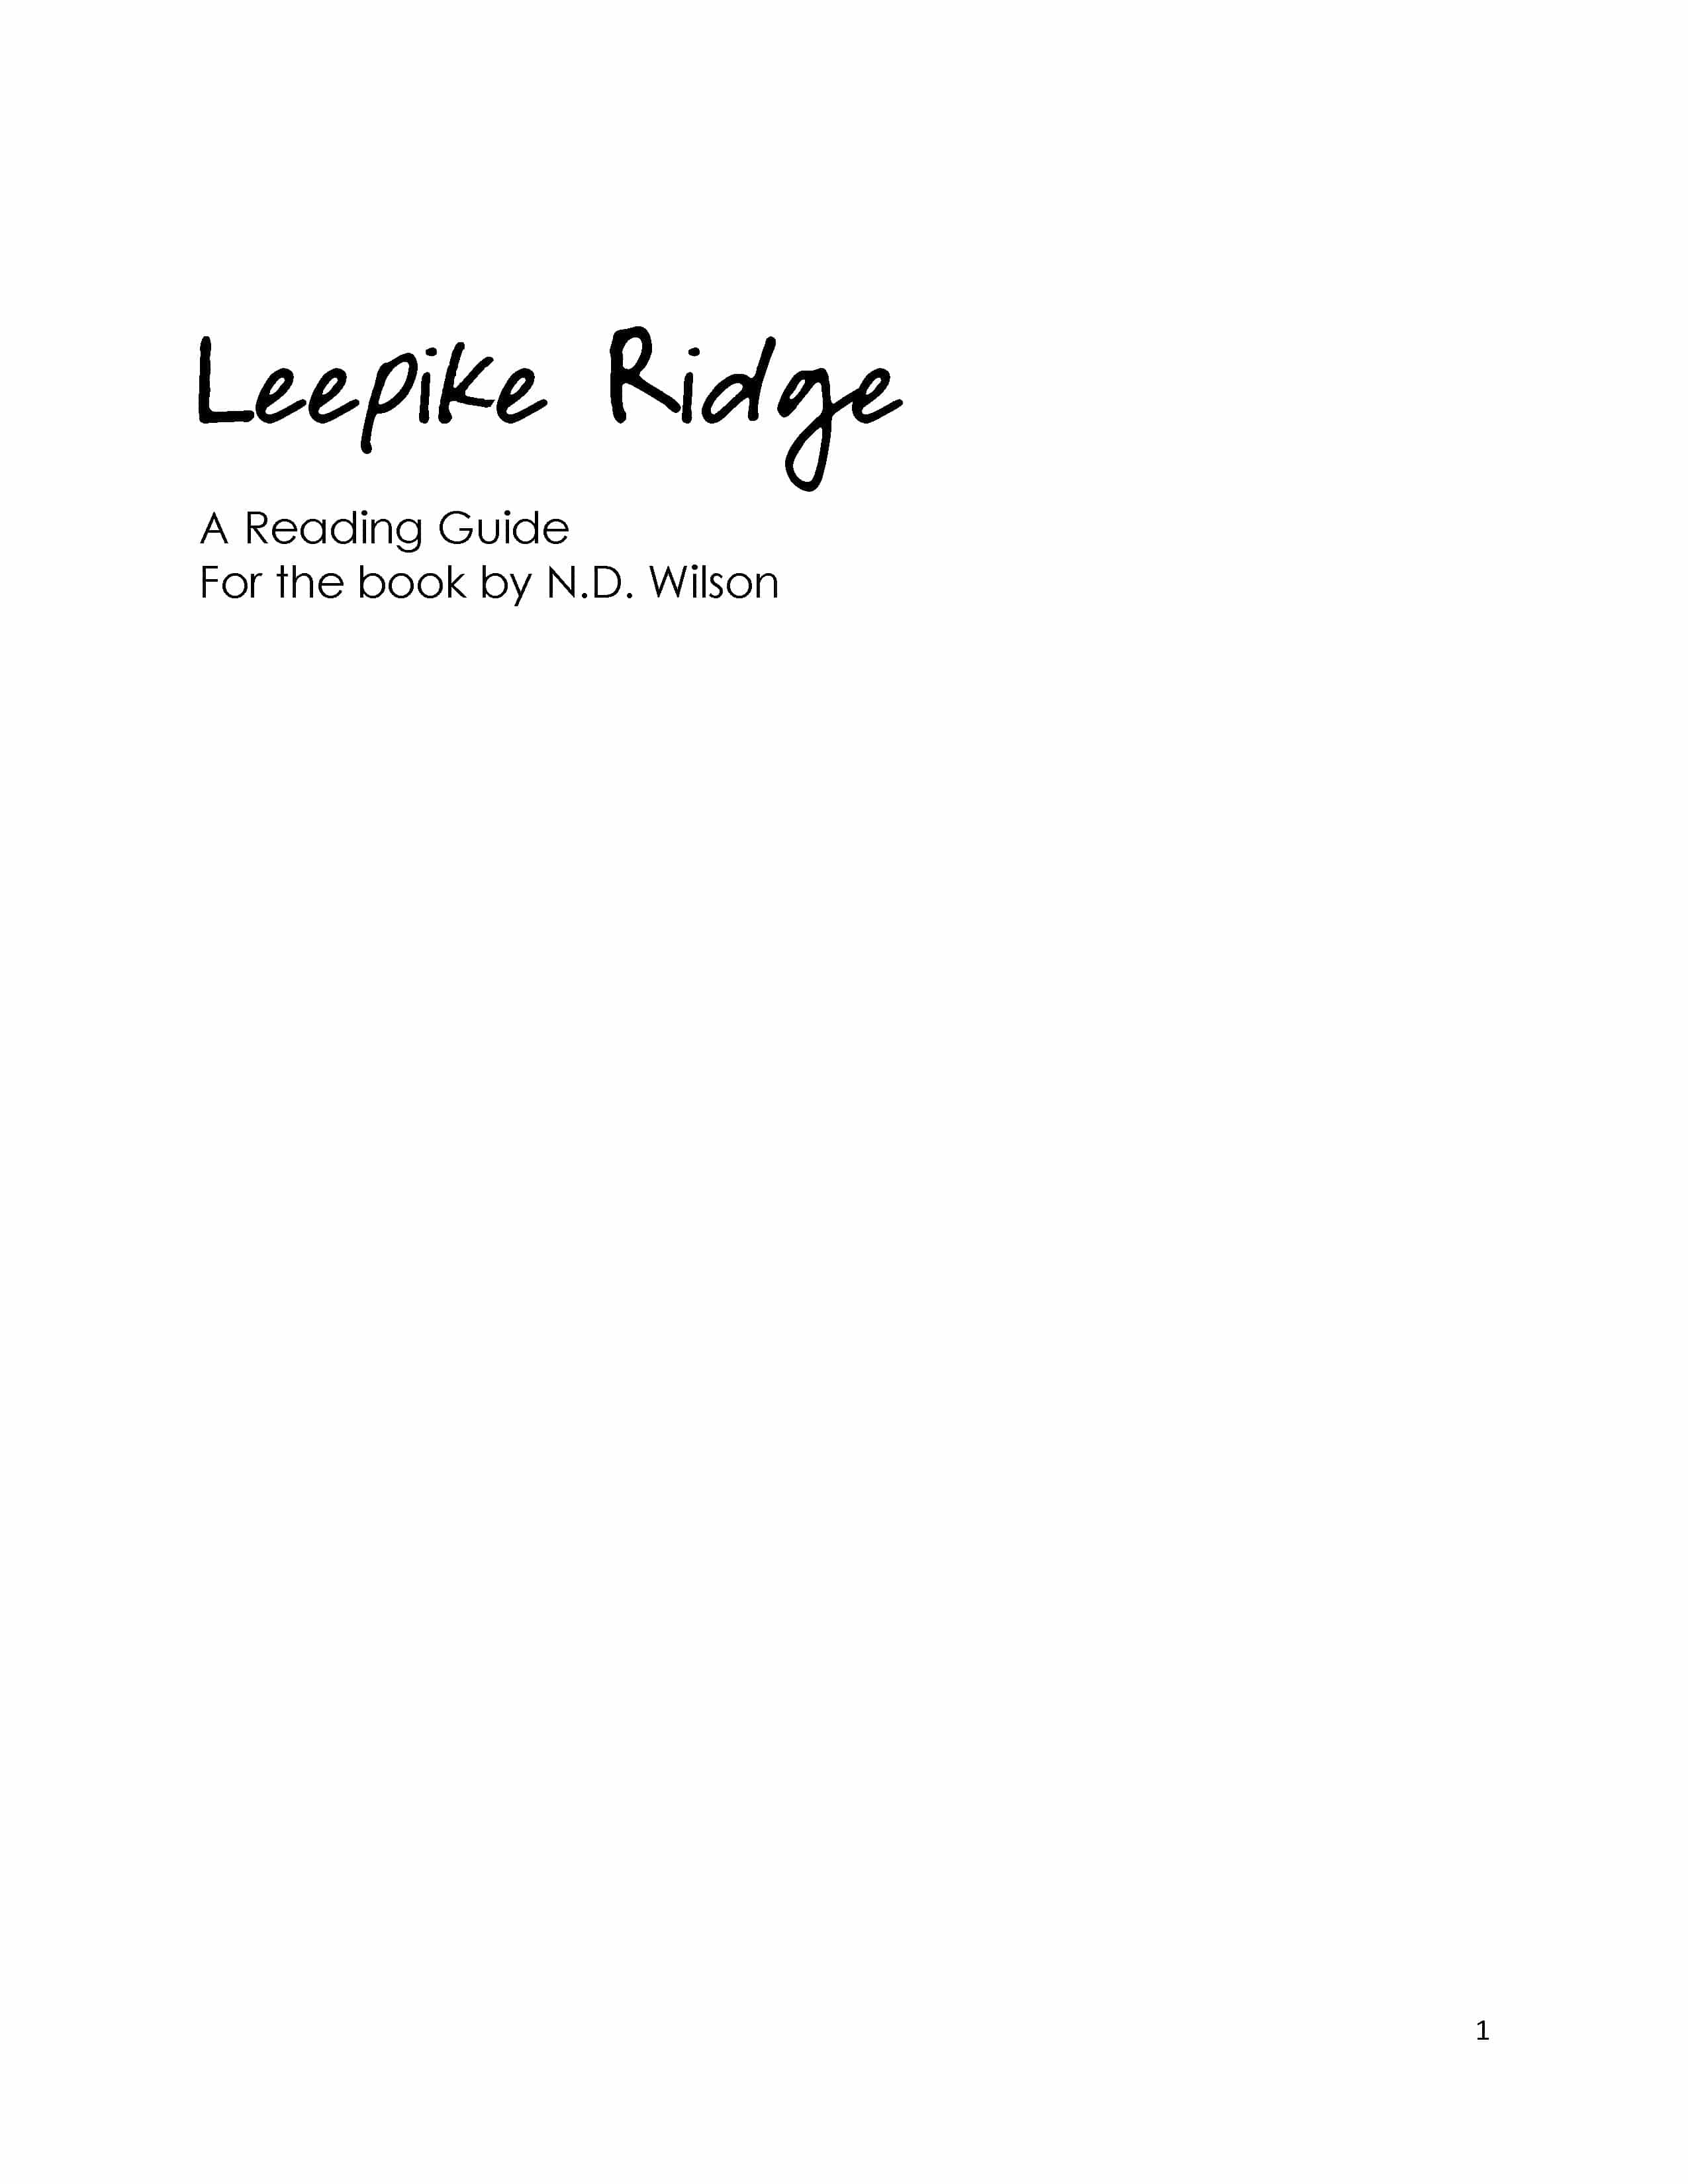 Leepike Ridge Reading Guide (Download)